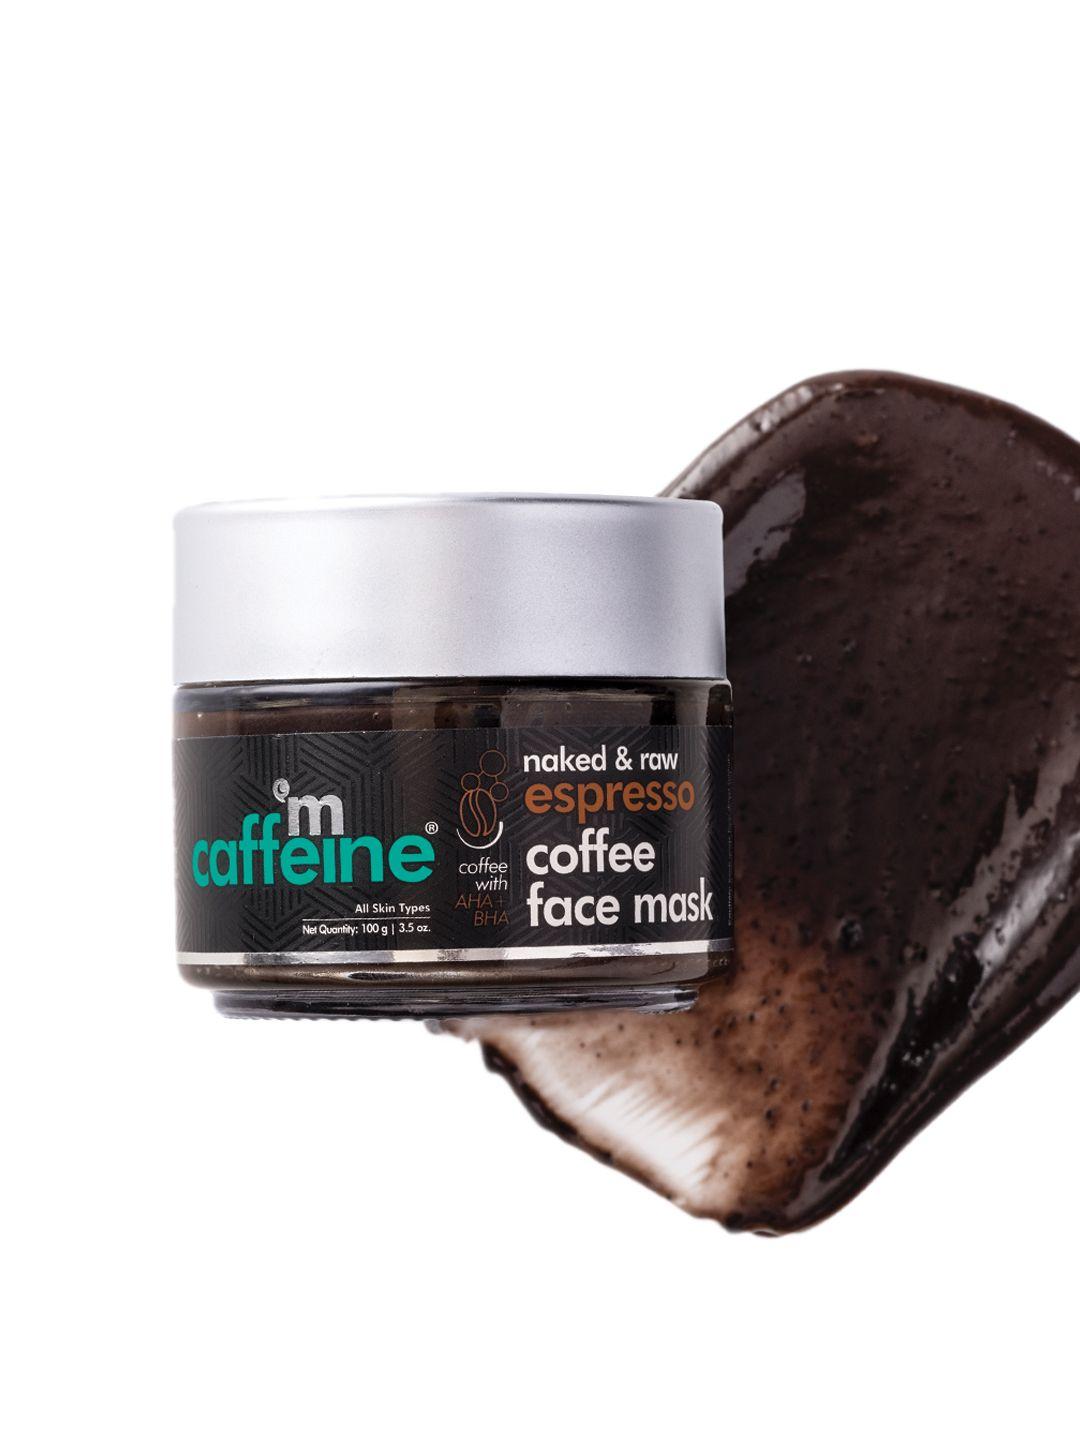 mcaffeine exfoliating espresso coffee face mask-removes dirt & unclogs pores 100g